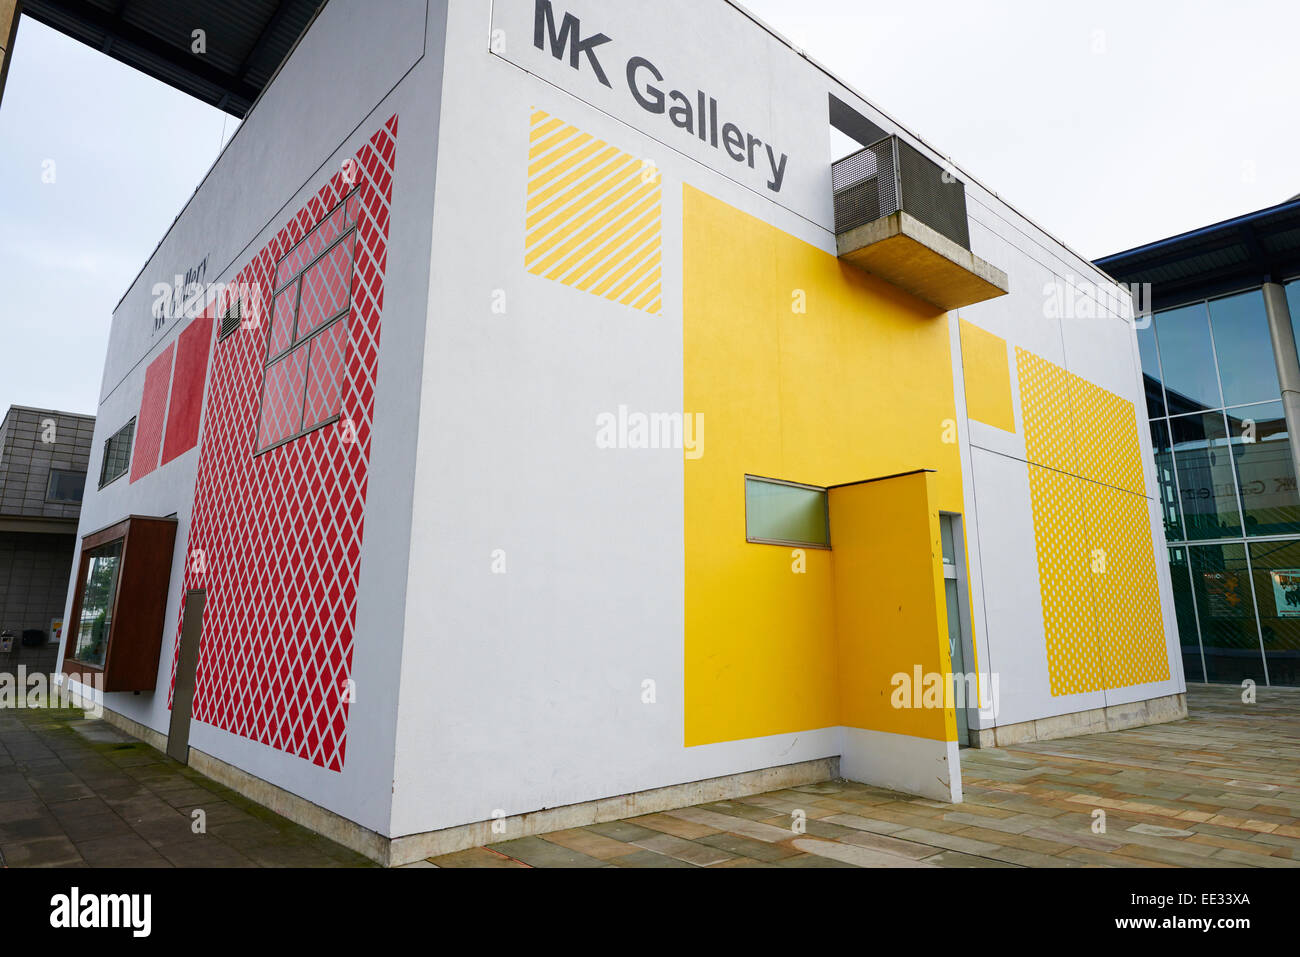 MK Gallery Designed By Andrzej Blonski Margaret Powell Square Milton Keynes Buckinghamshire UK Stock Photo